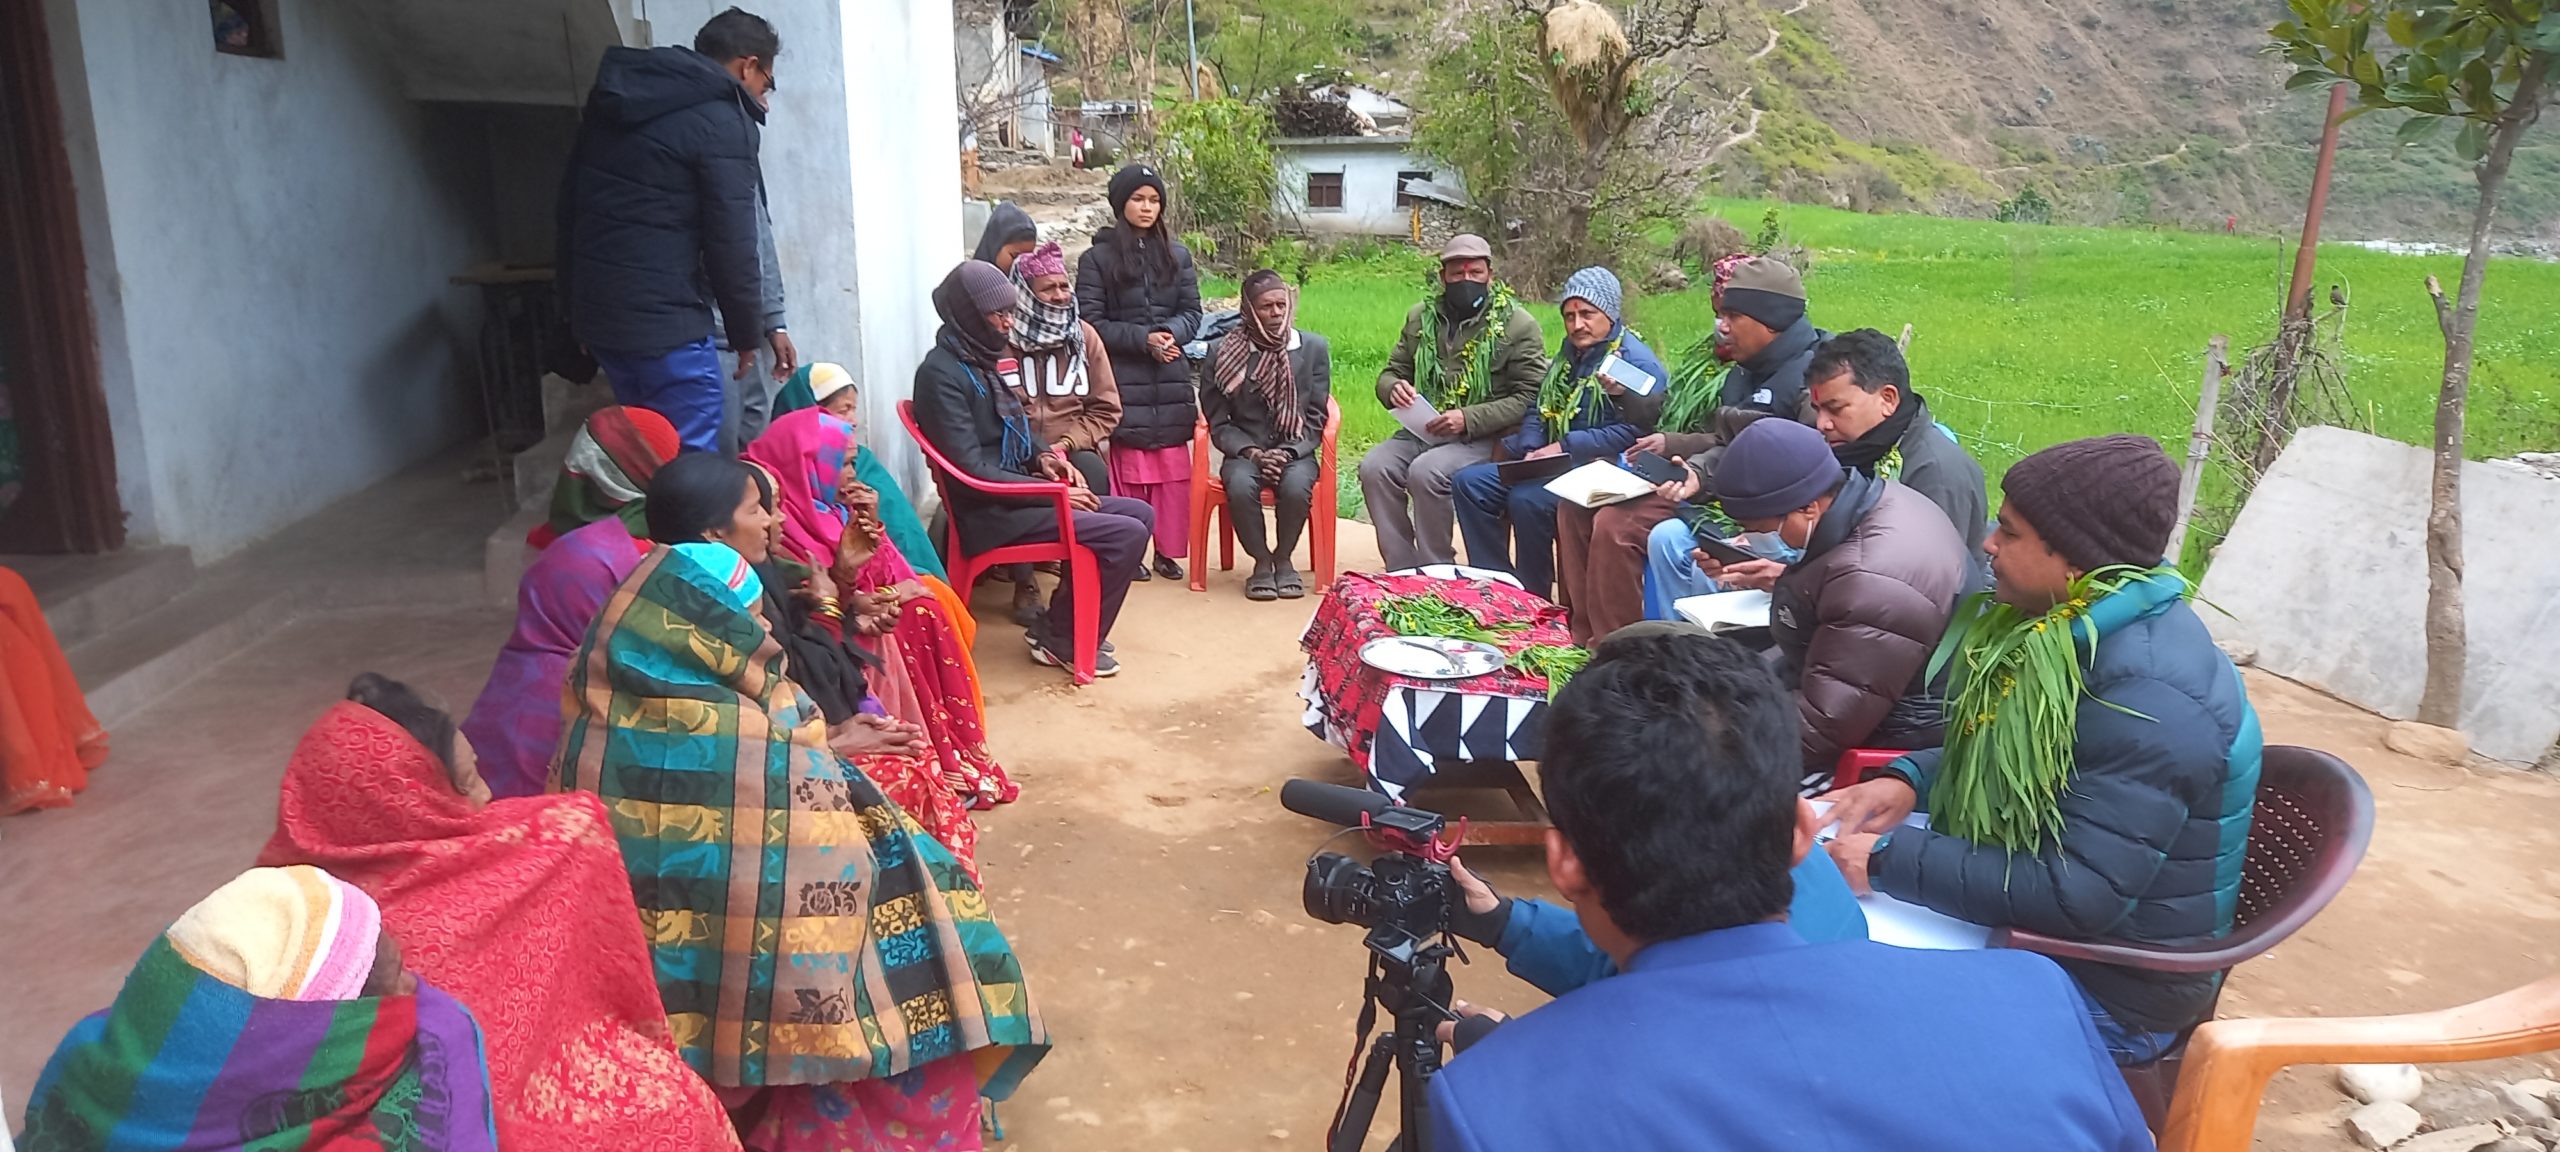 People sitting in circle in Nepali village